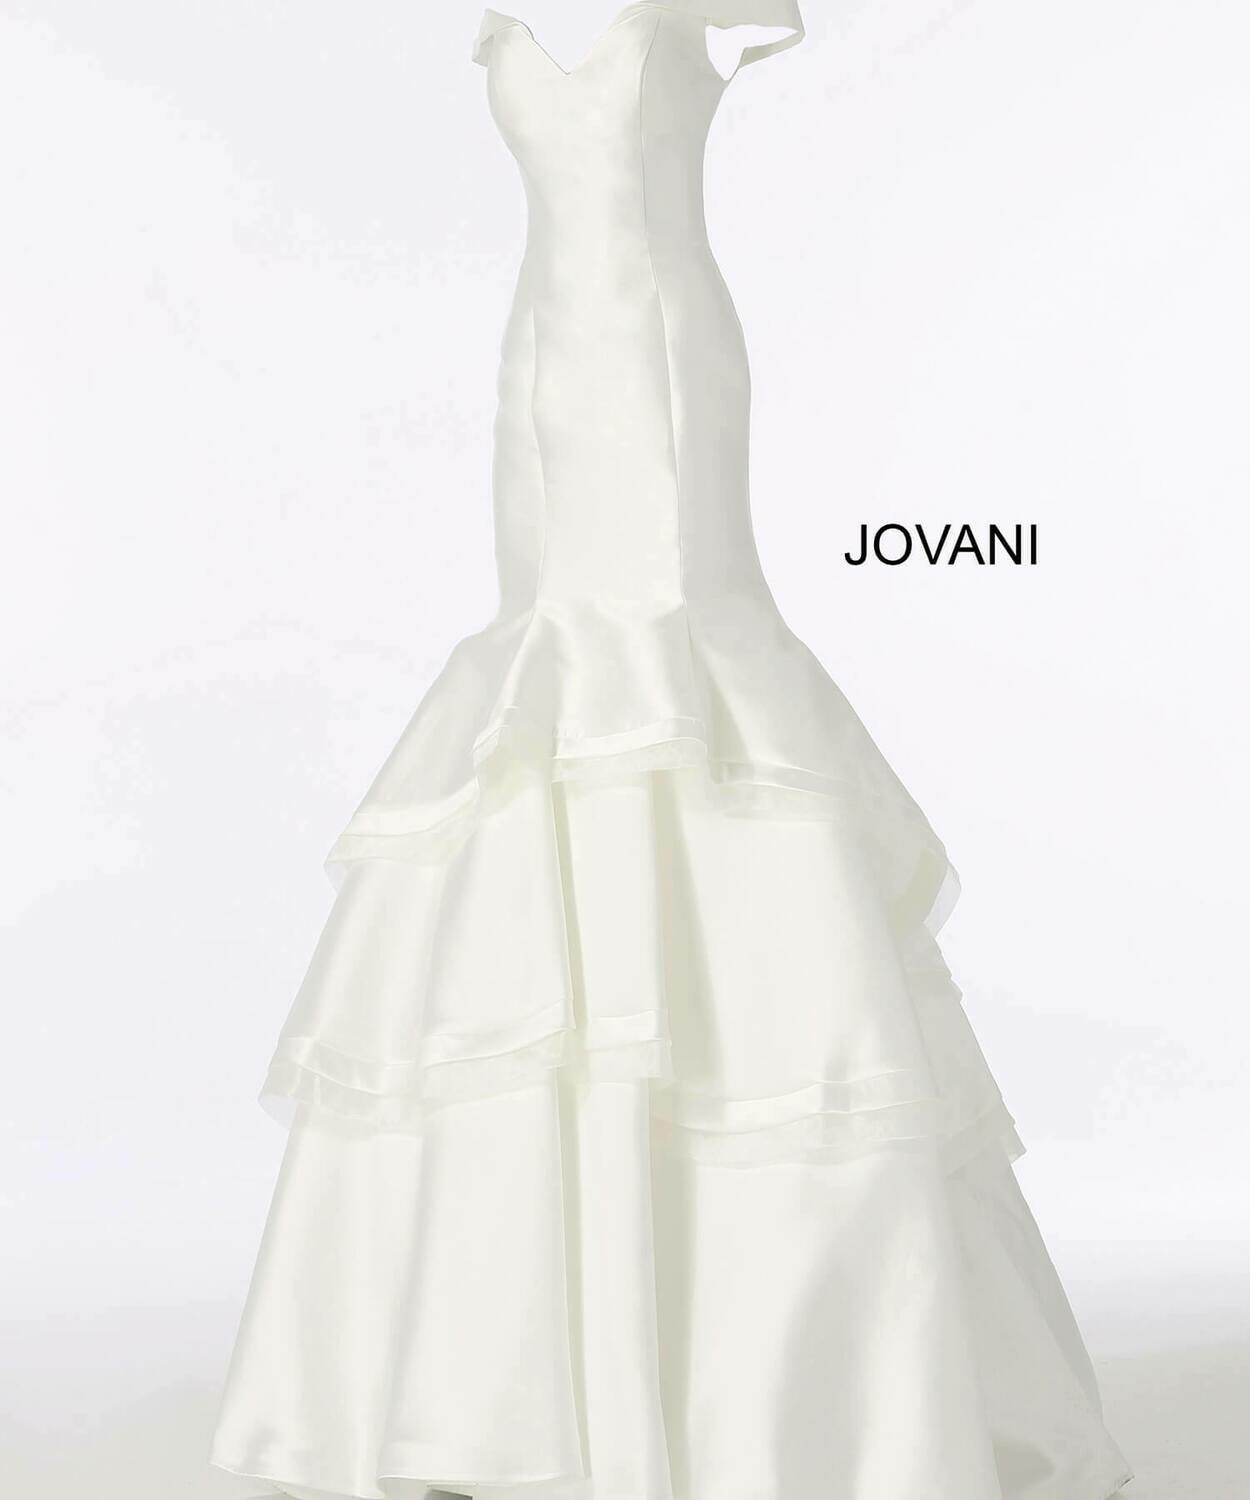 JOVANI Mermaid Gown - SZ 12 in White